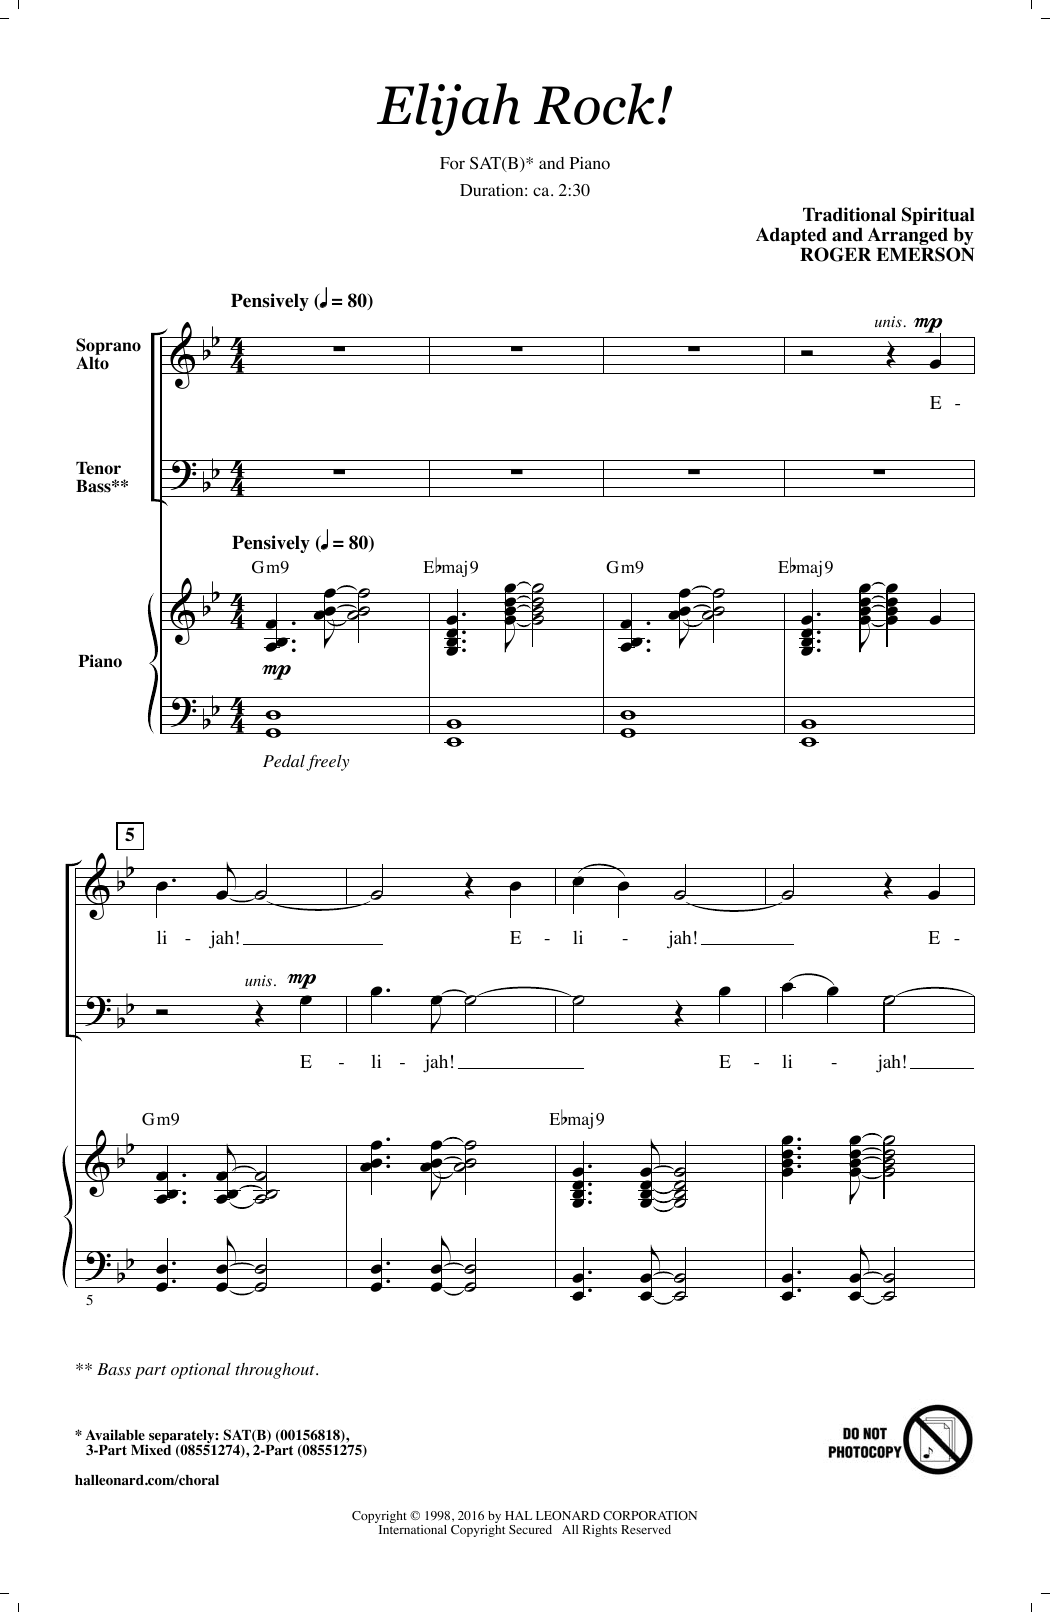 Roger Emerson Elijah Rock Sheet Music Notes & Chords for SATB - Download or Print PDF